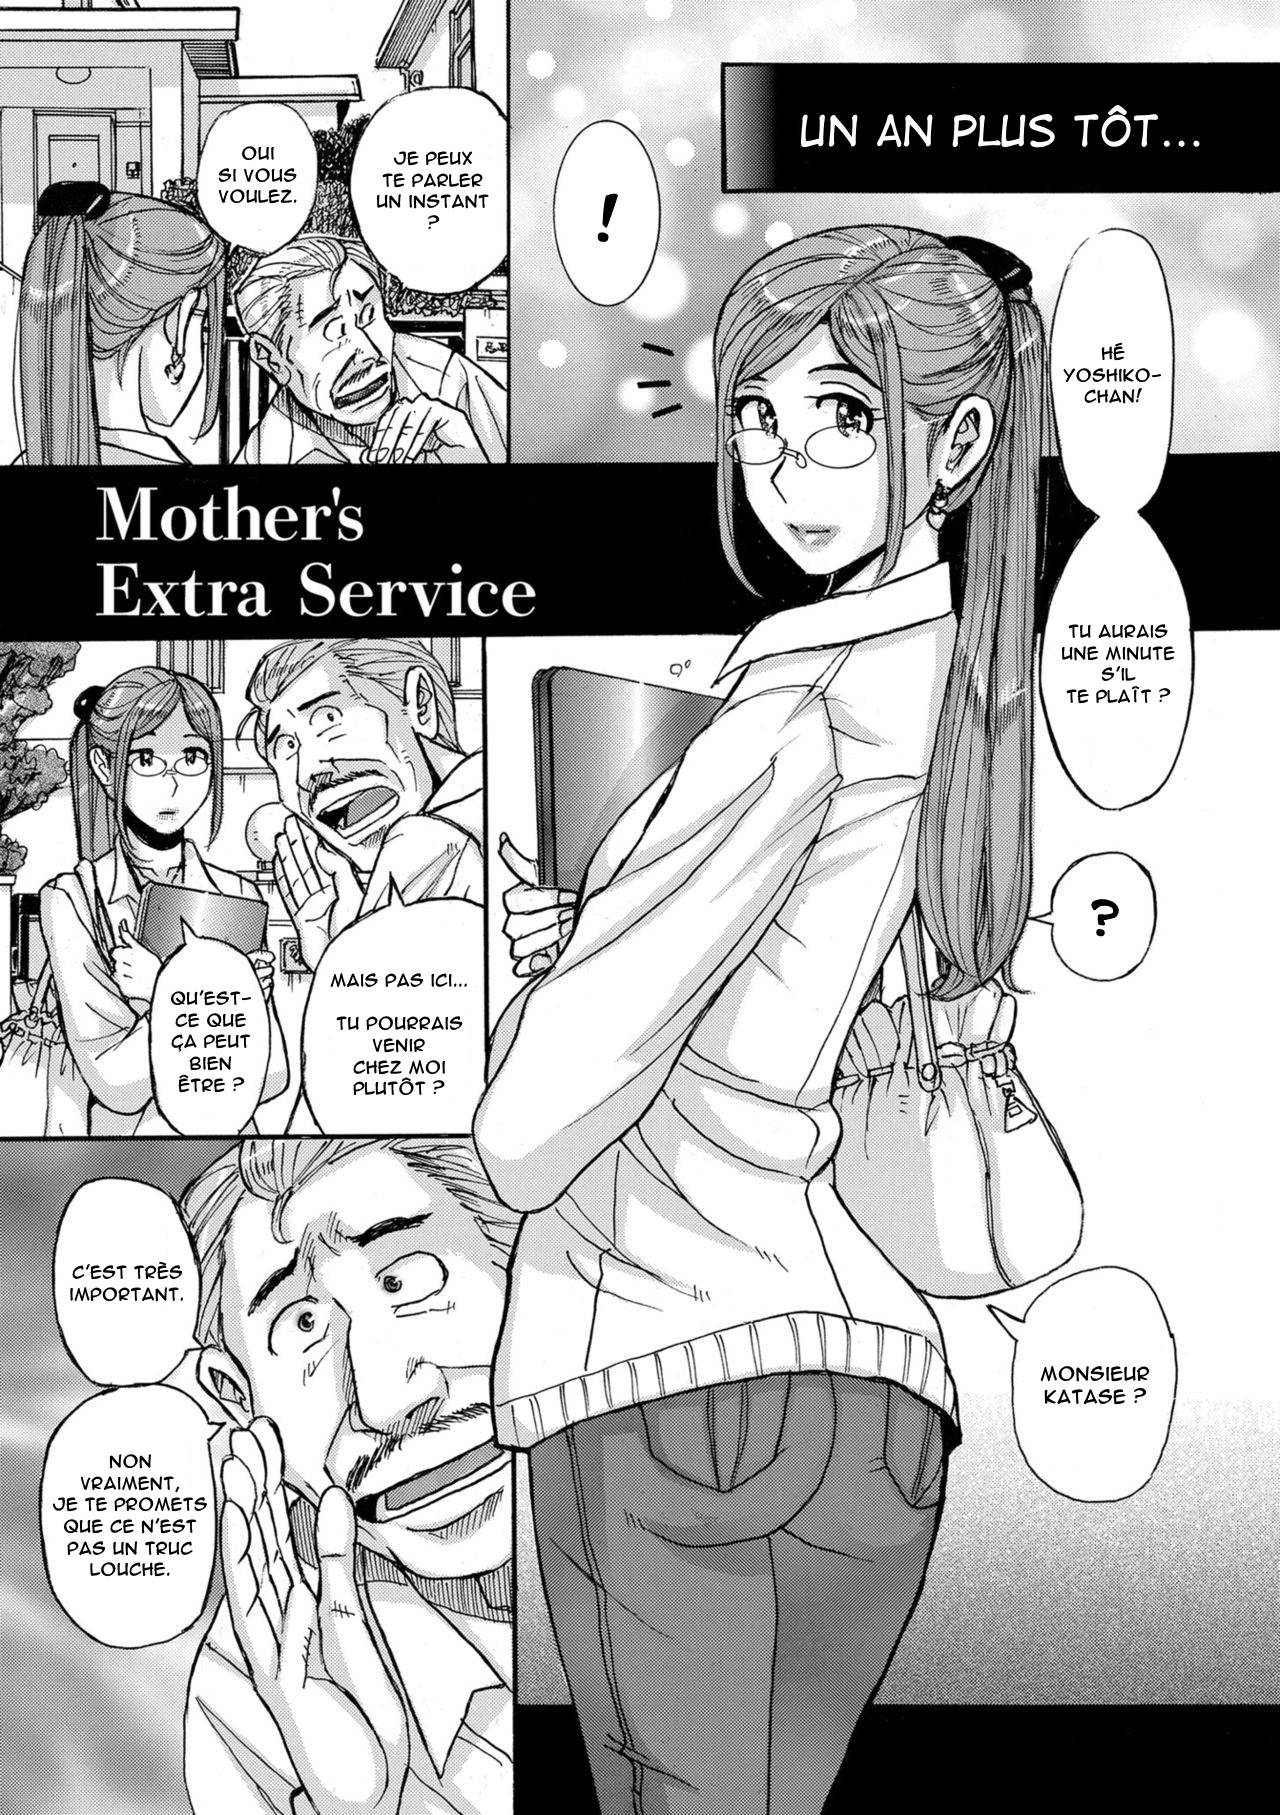 Mother’s Care Service numero d'image 75